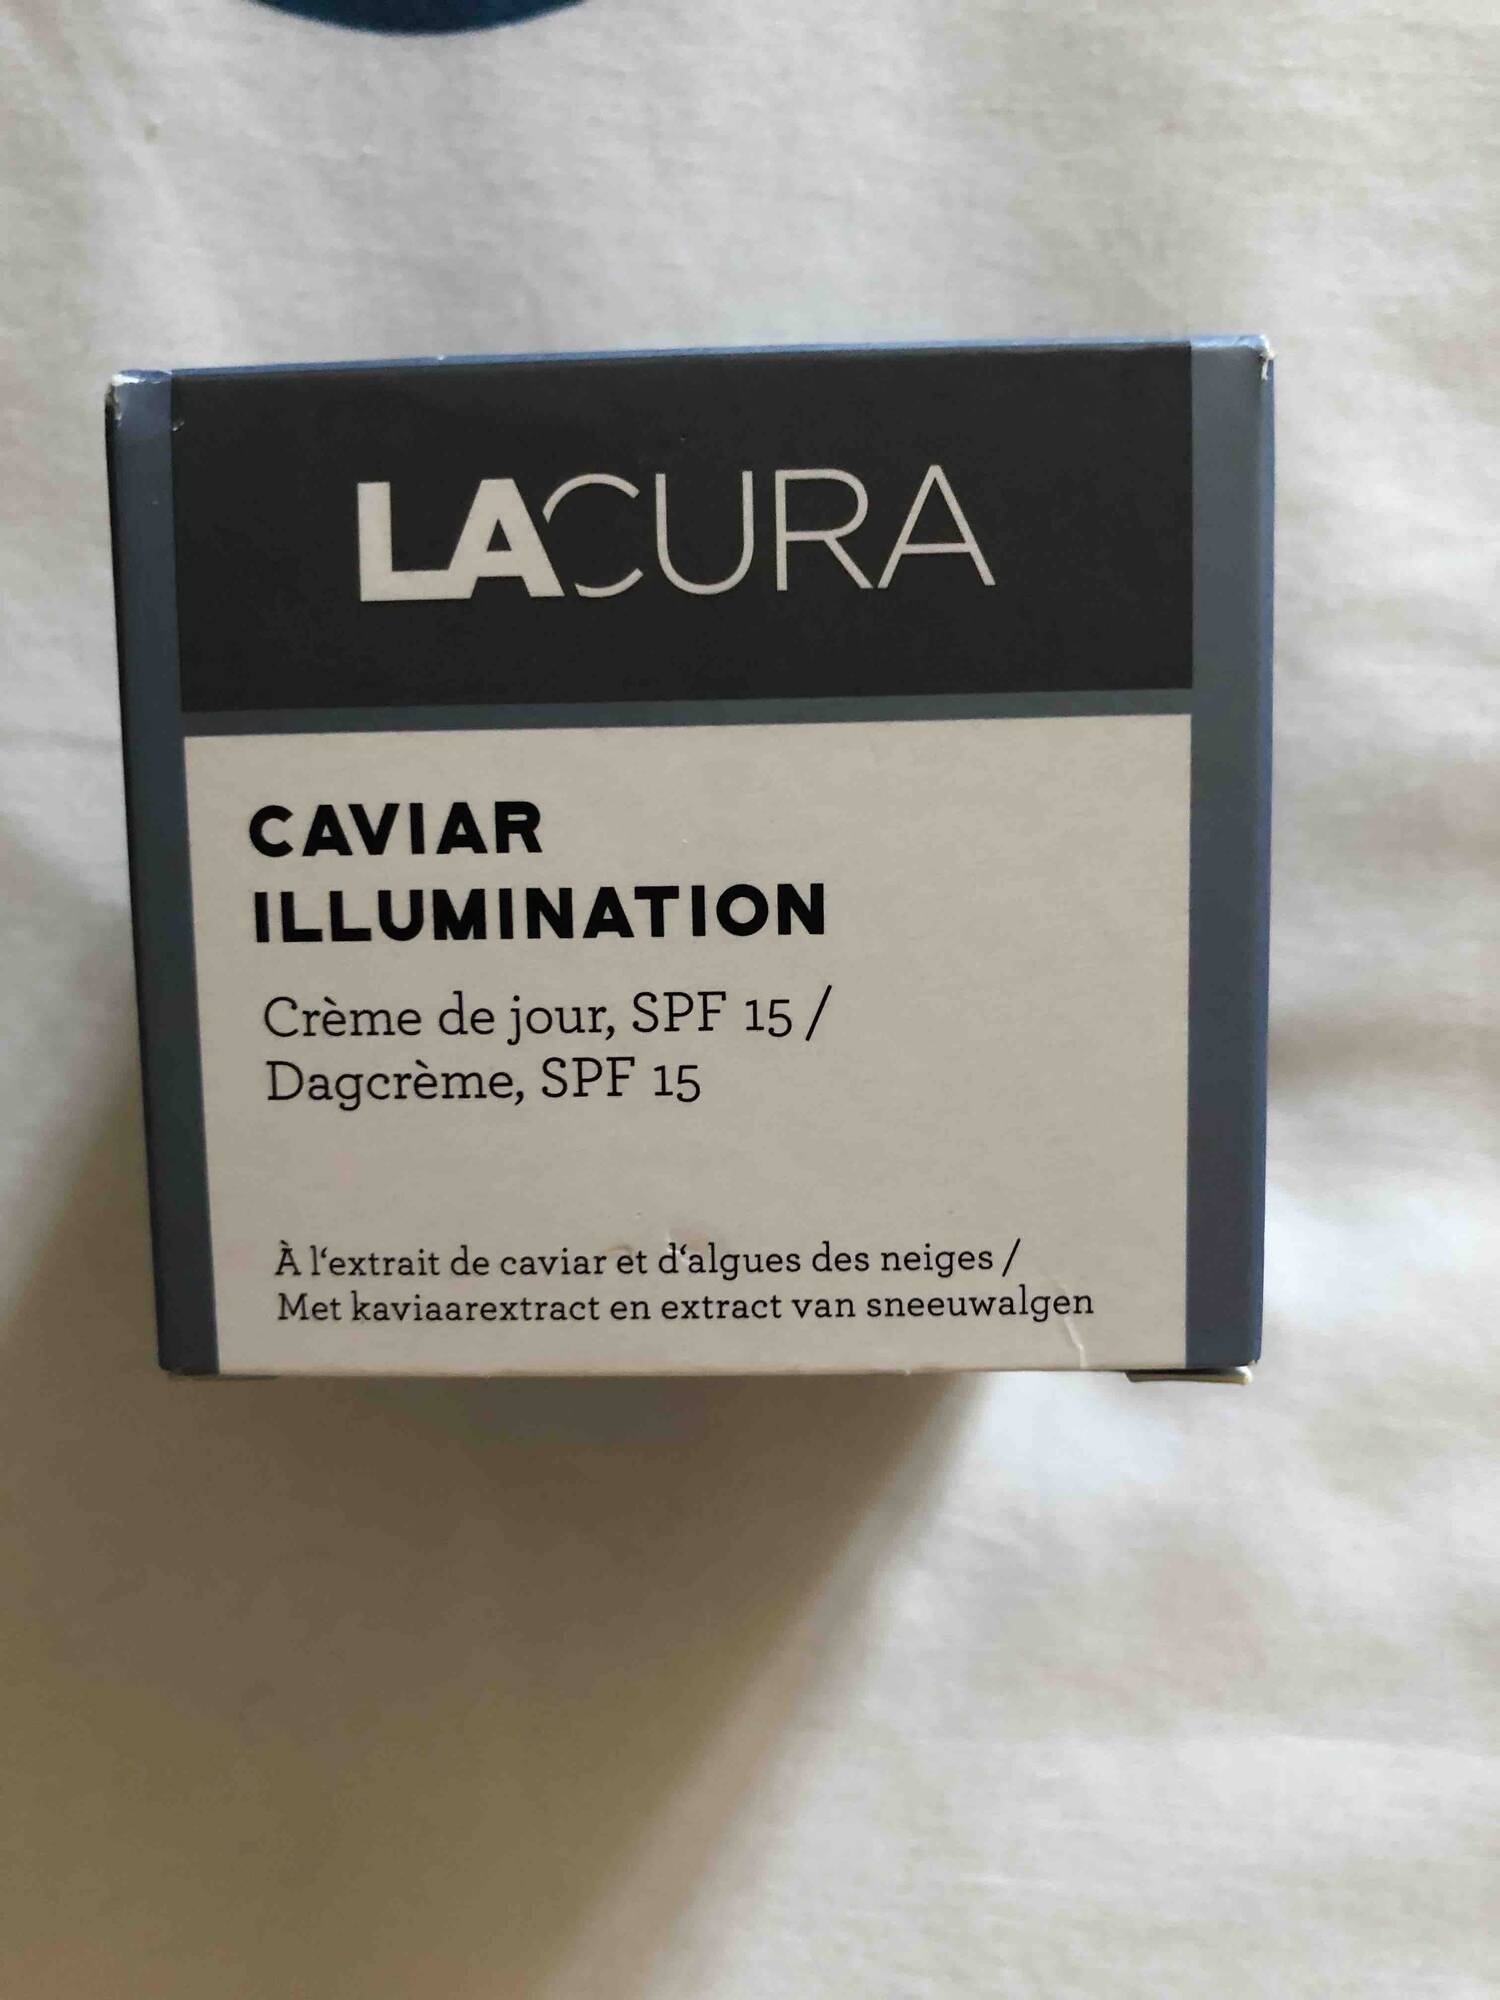 LACURA - Caviar illumination - Crème de jour SPF 15